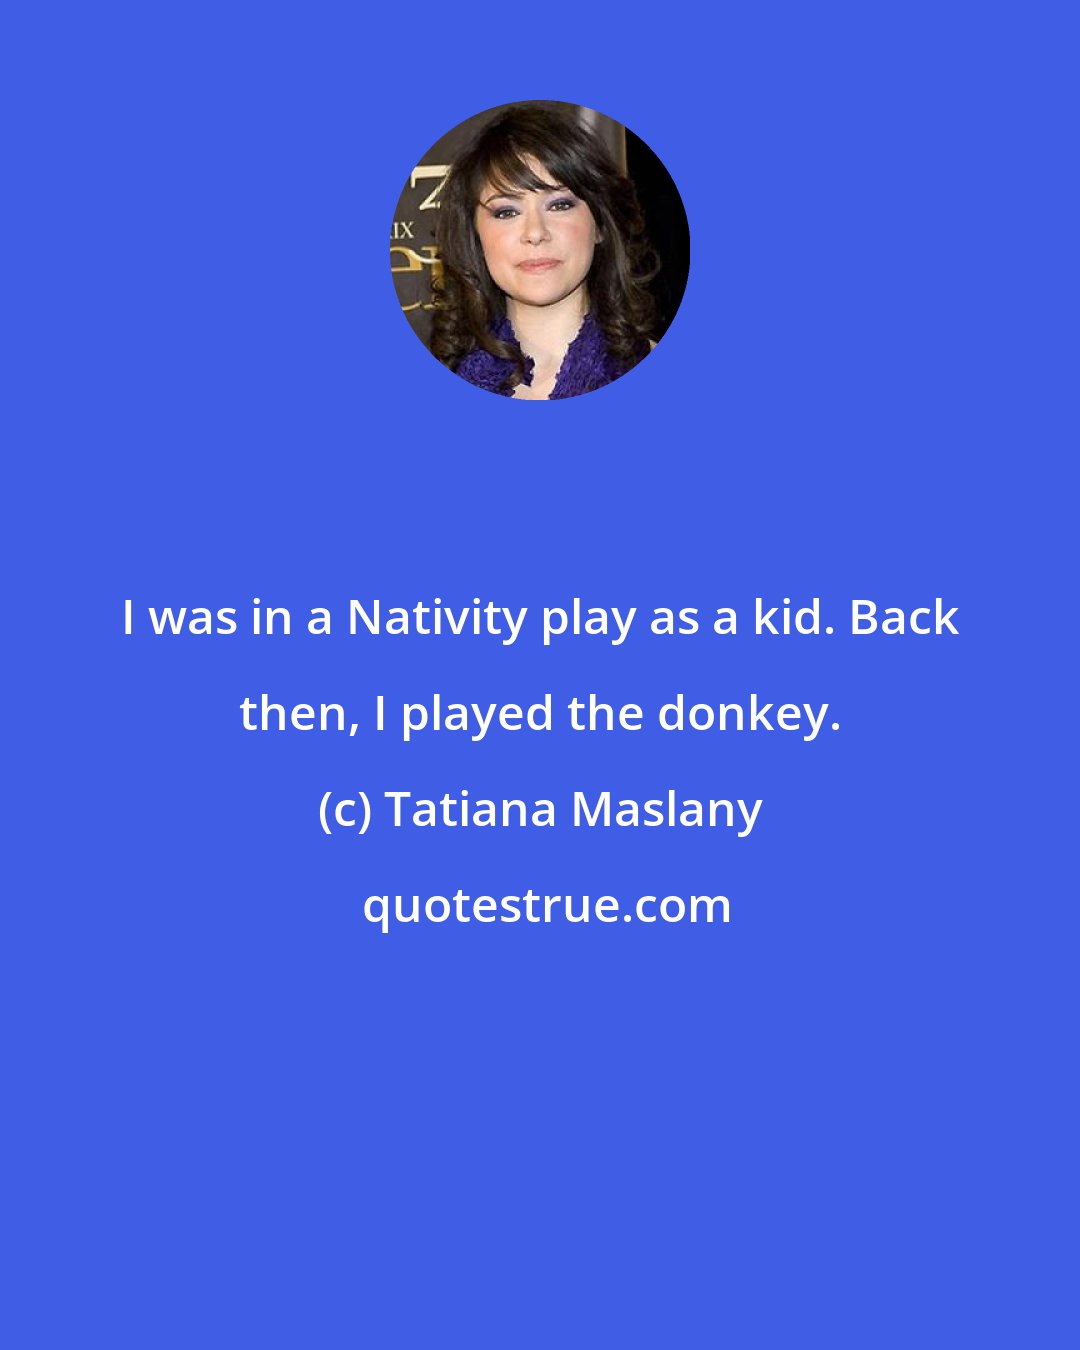 Tatiana Maslany: I was in a Nativity play as a kid. Back then, I played the donkey.